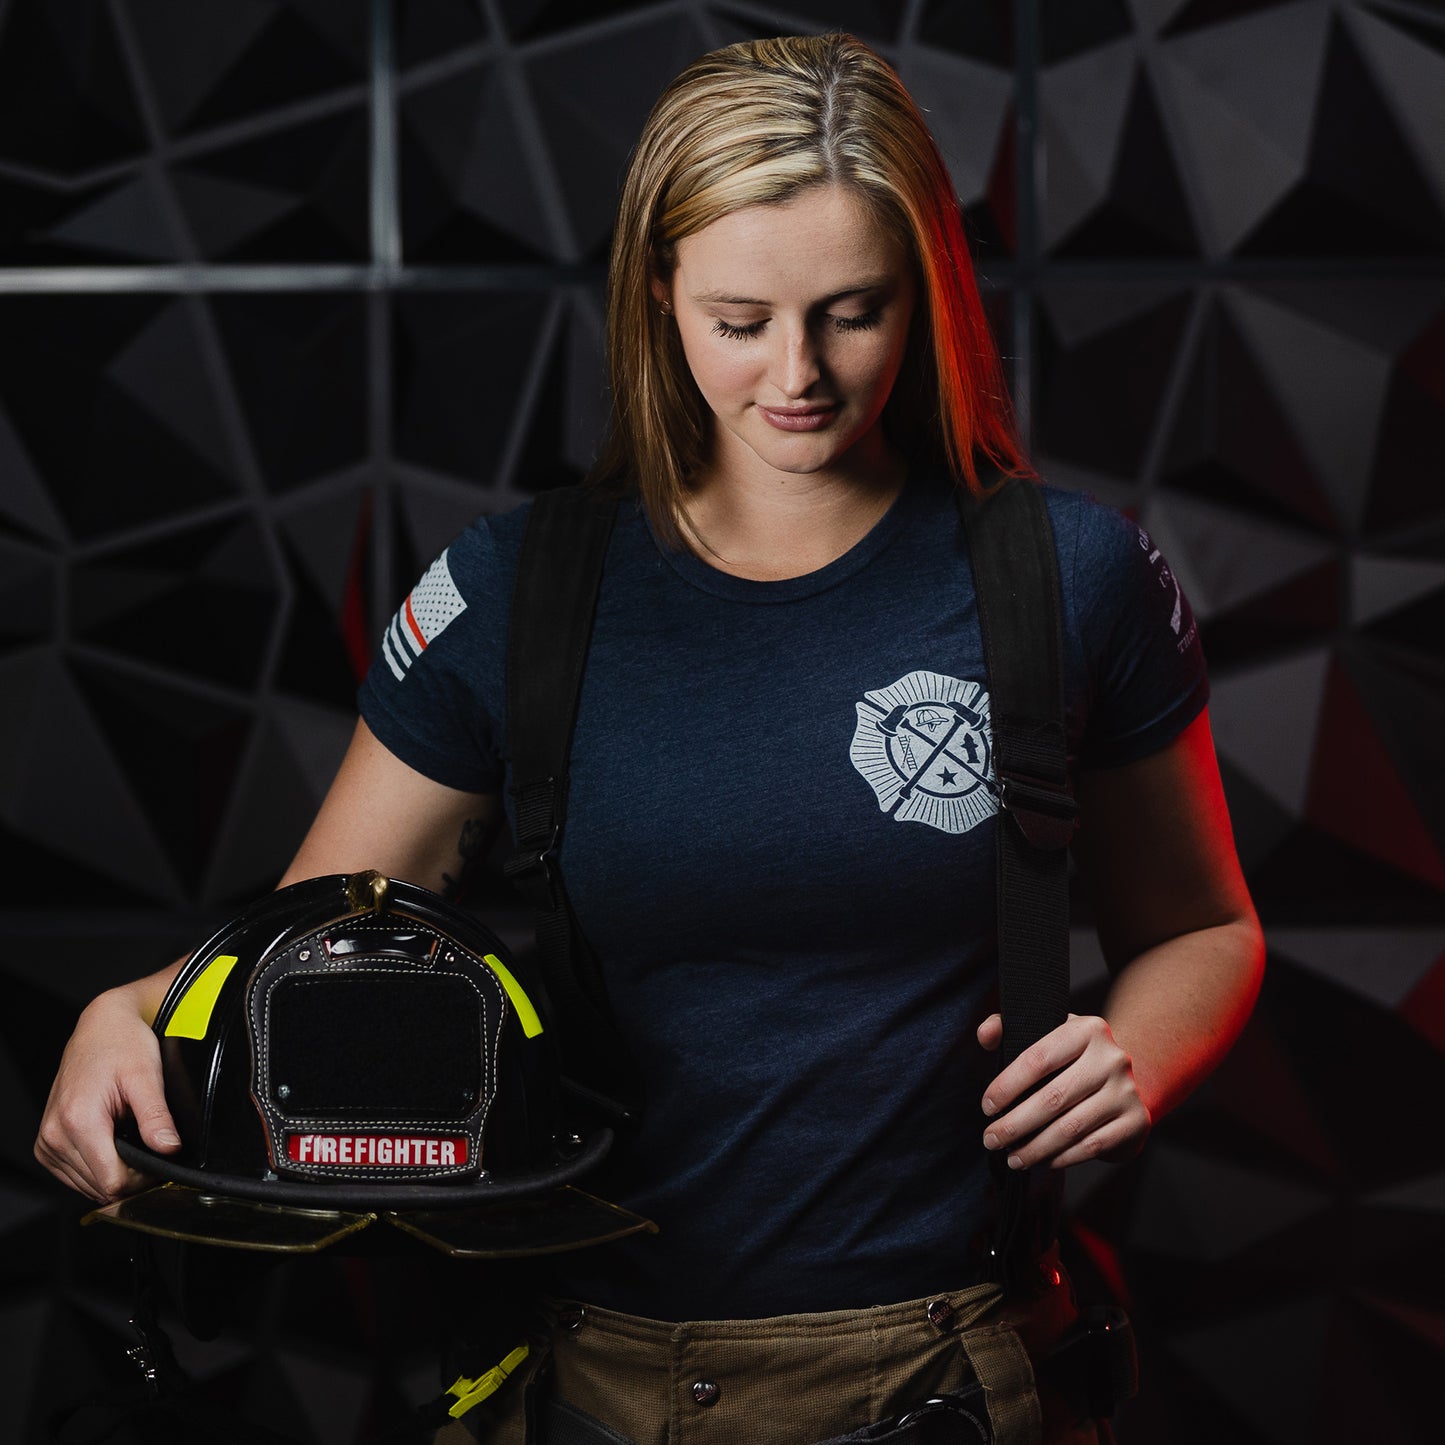 Firefighter Shirt for Women 